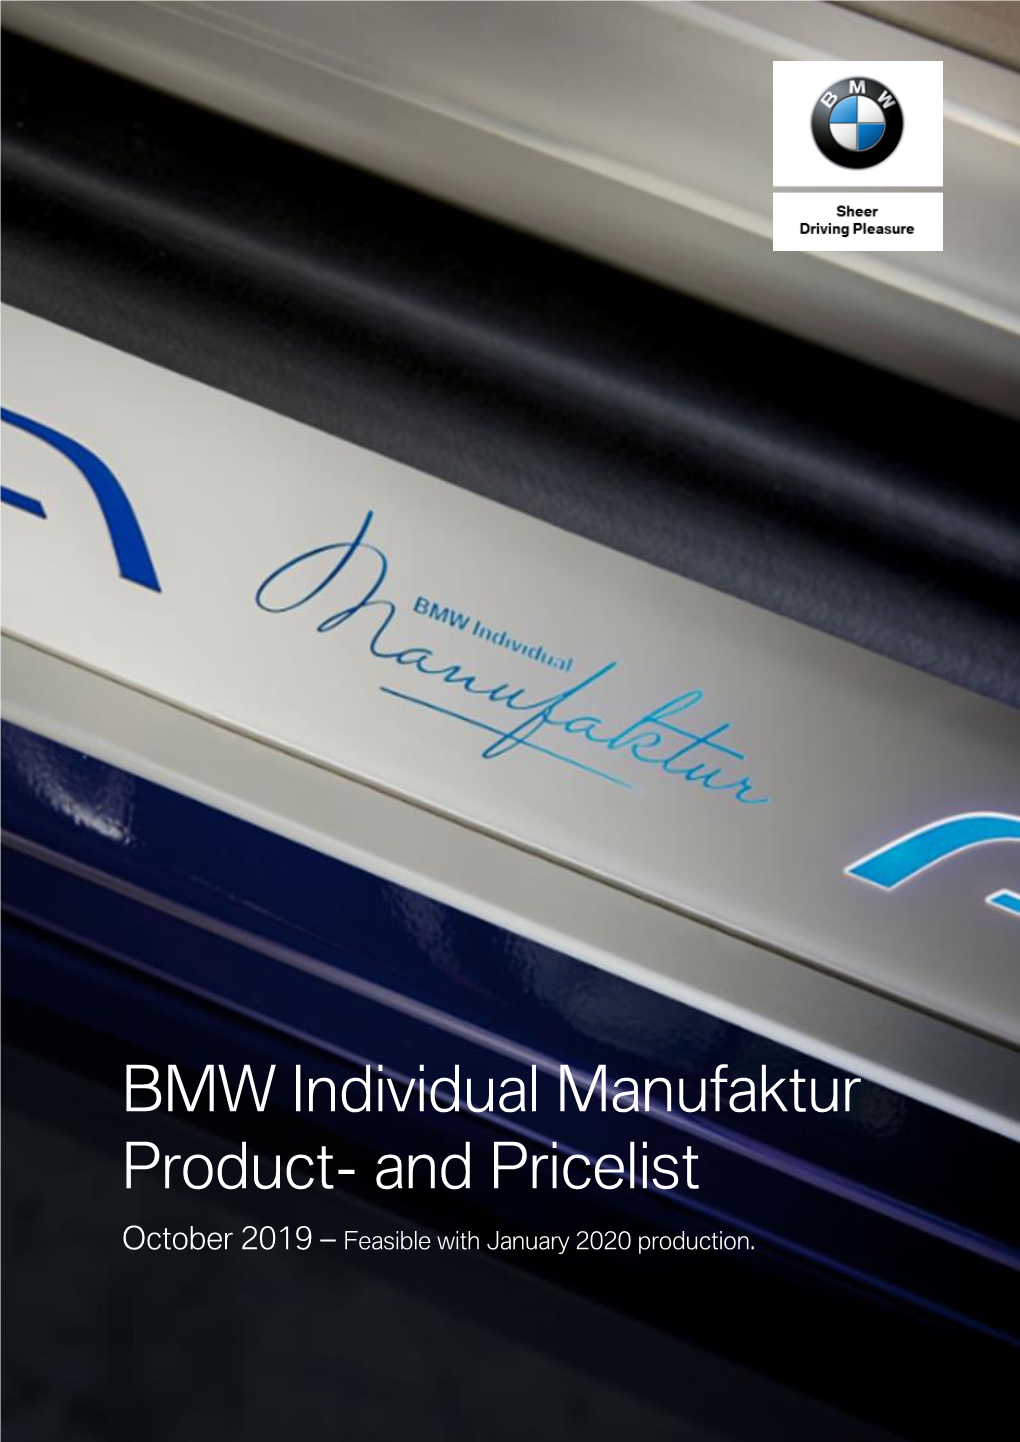 BMW Individual Manufaktur Product- and Pricelist